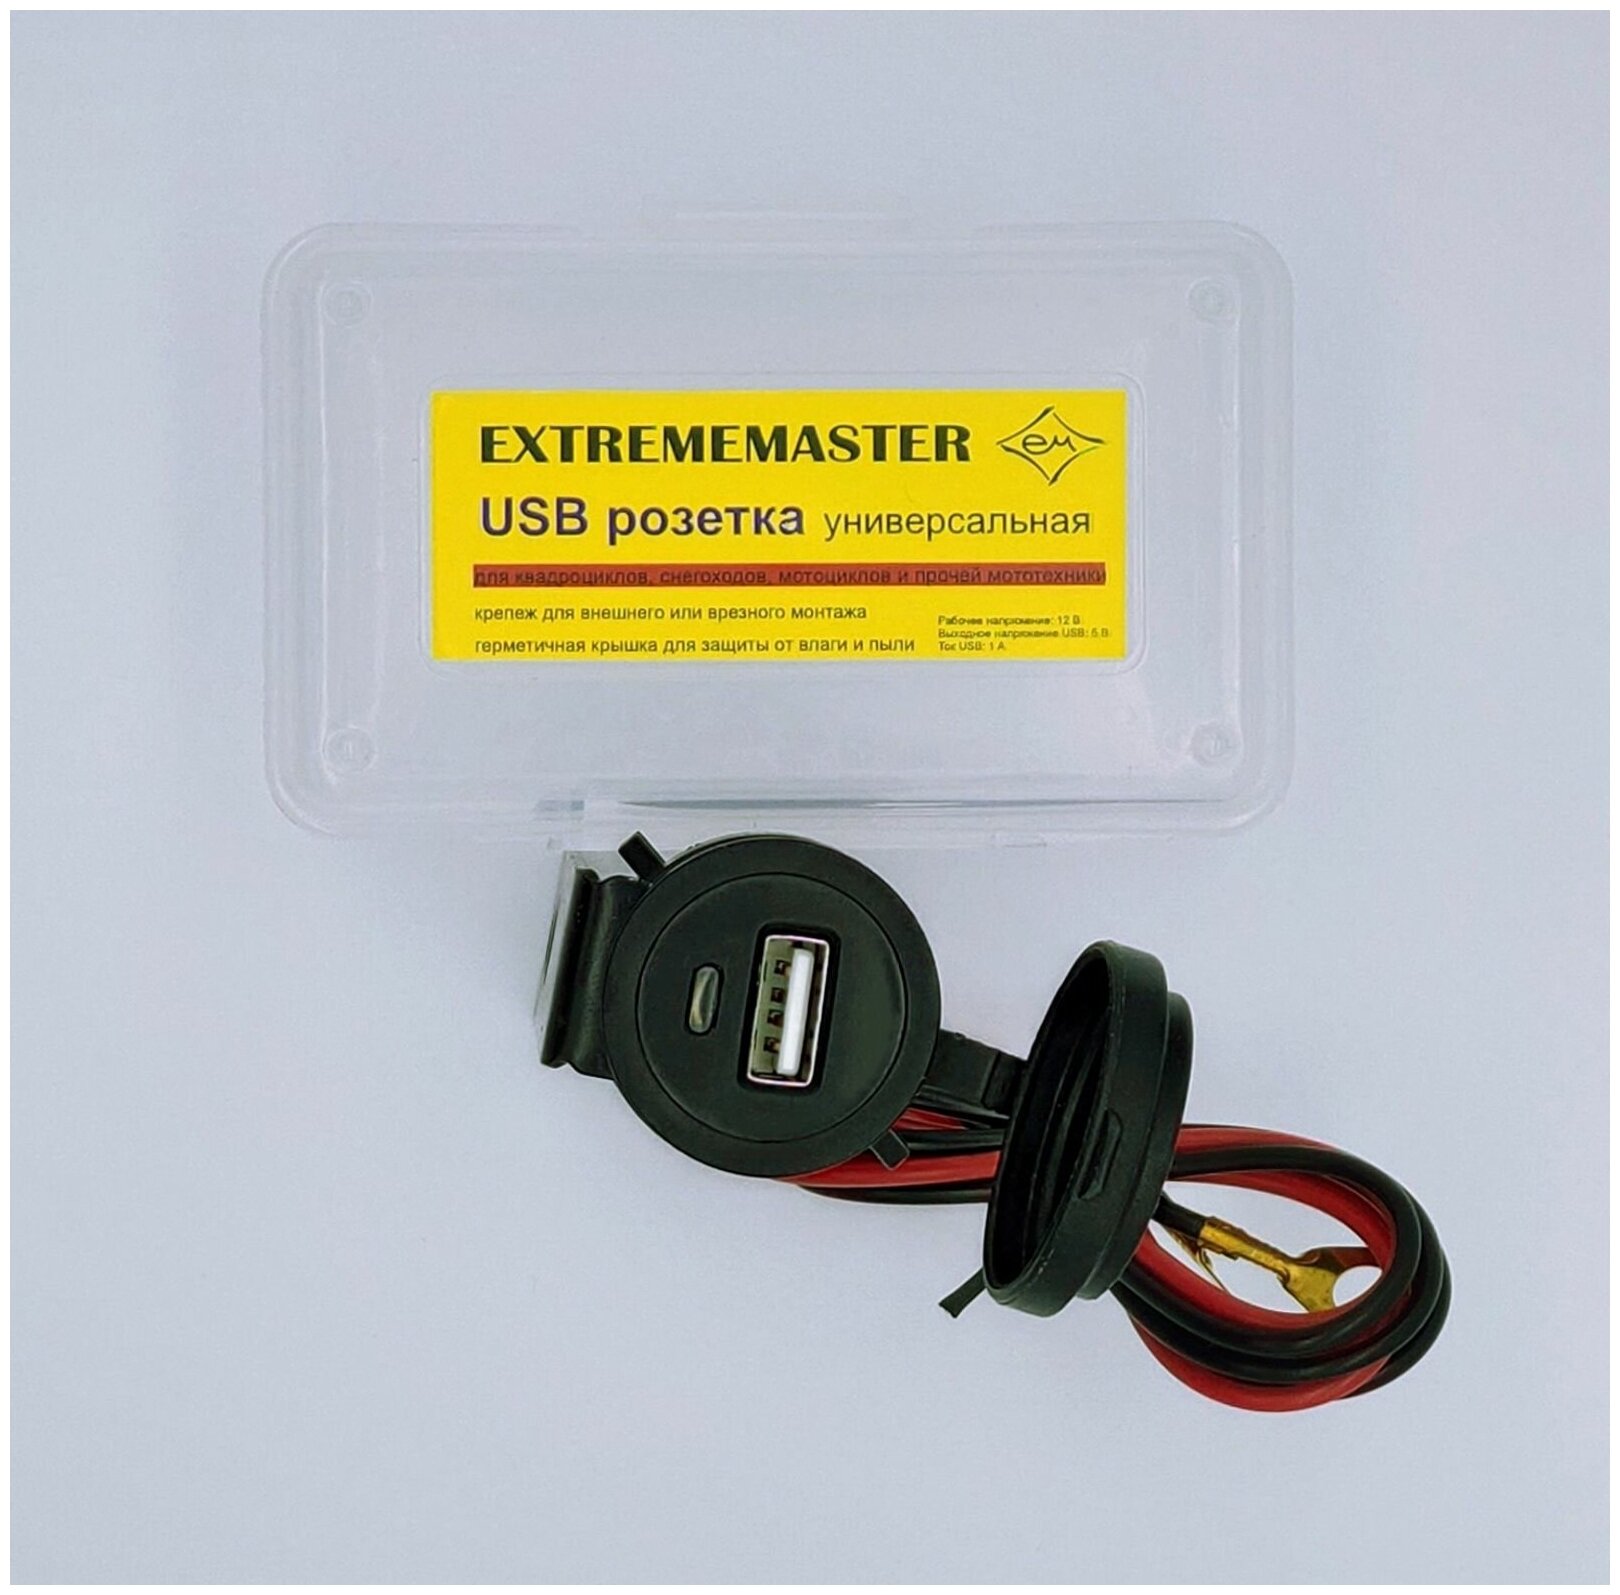 USB розетка EXTREMEMASTER универсальная